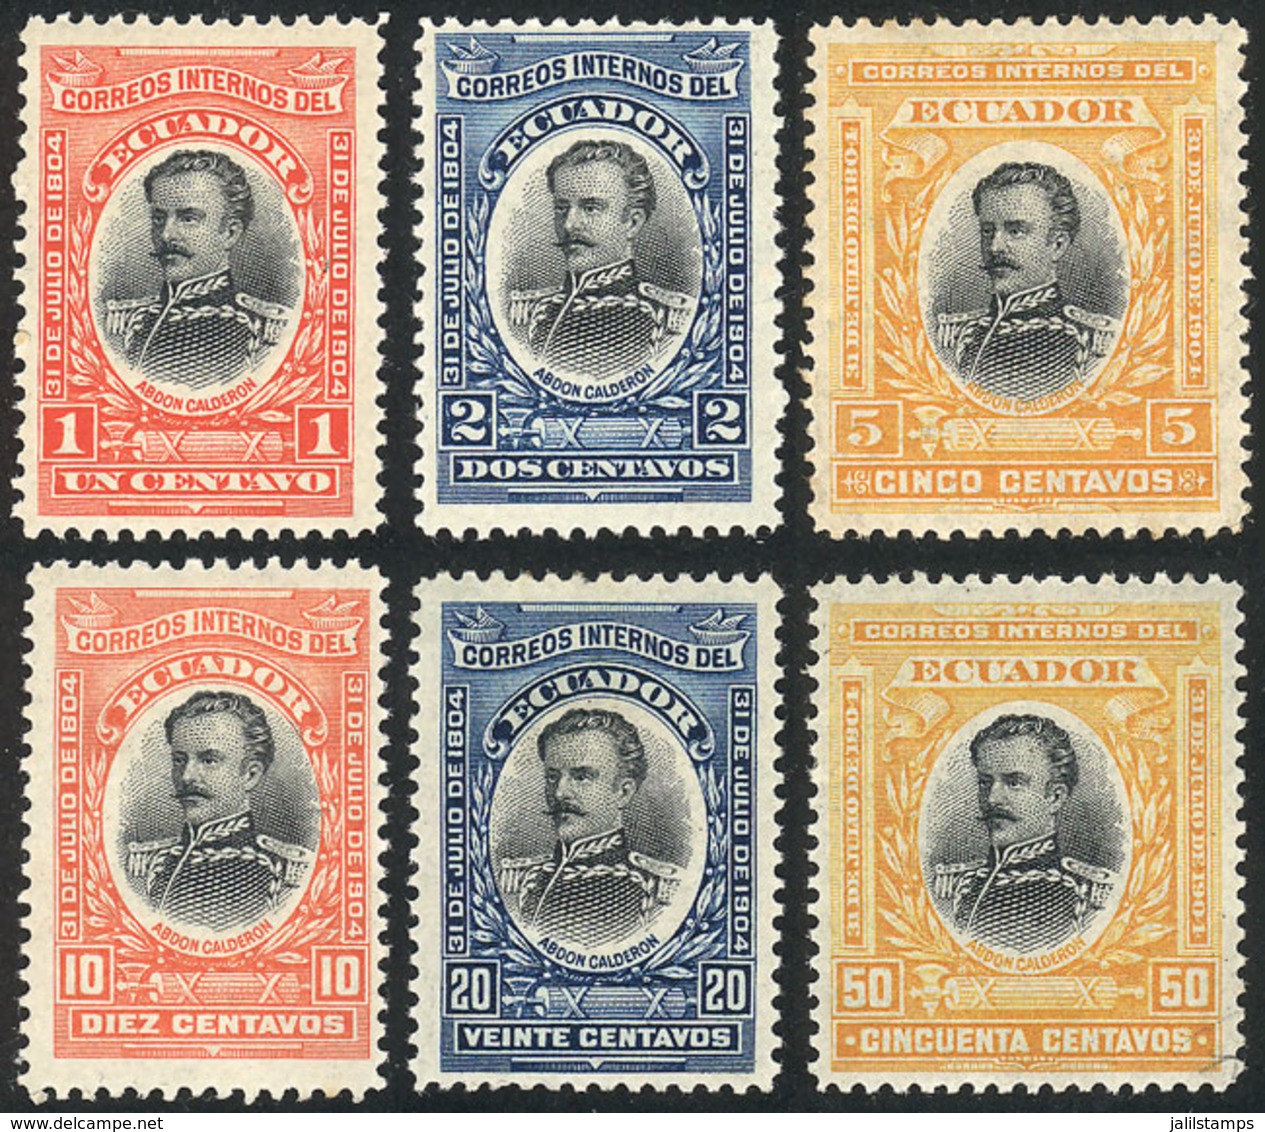 ECUADOR: Sc.160/165, 1904 Presidents, Cmpl. Set Of 6 Values, Mint Lightly Hinged, VF Quality! - Ecuador